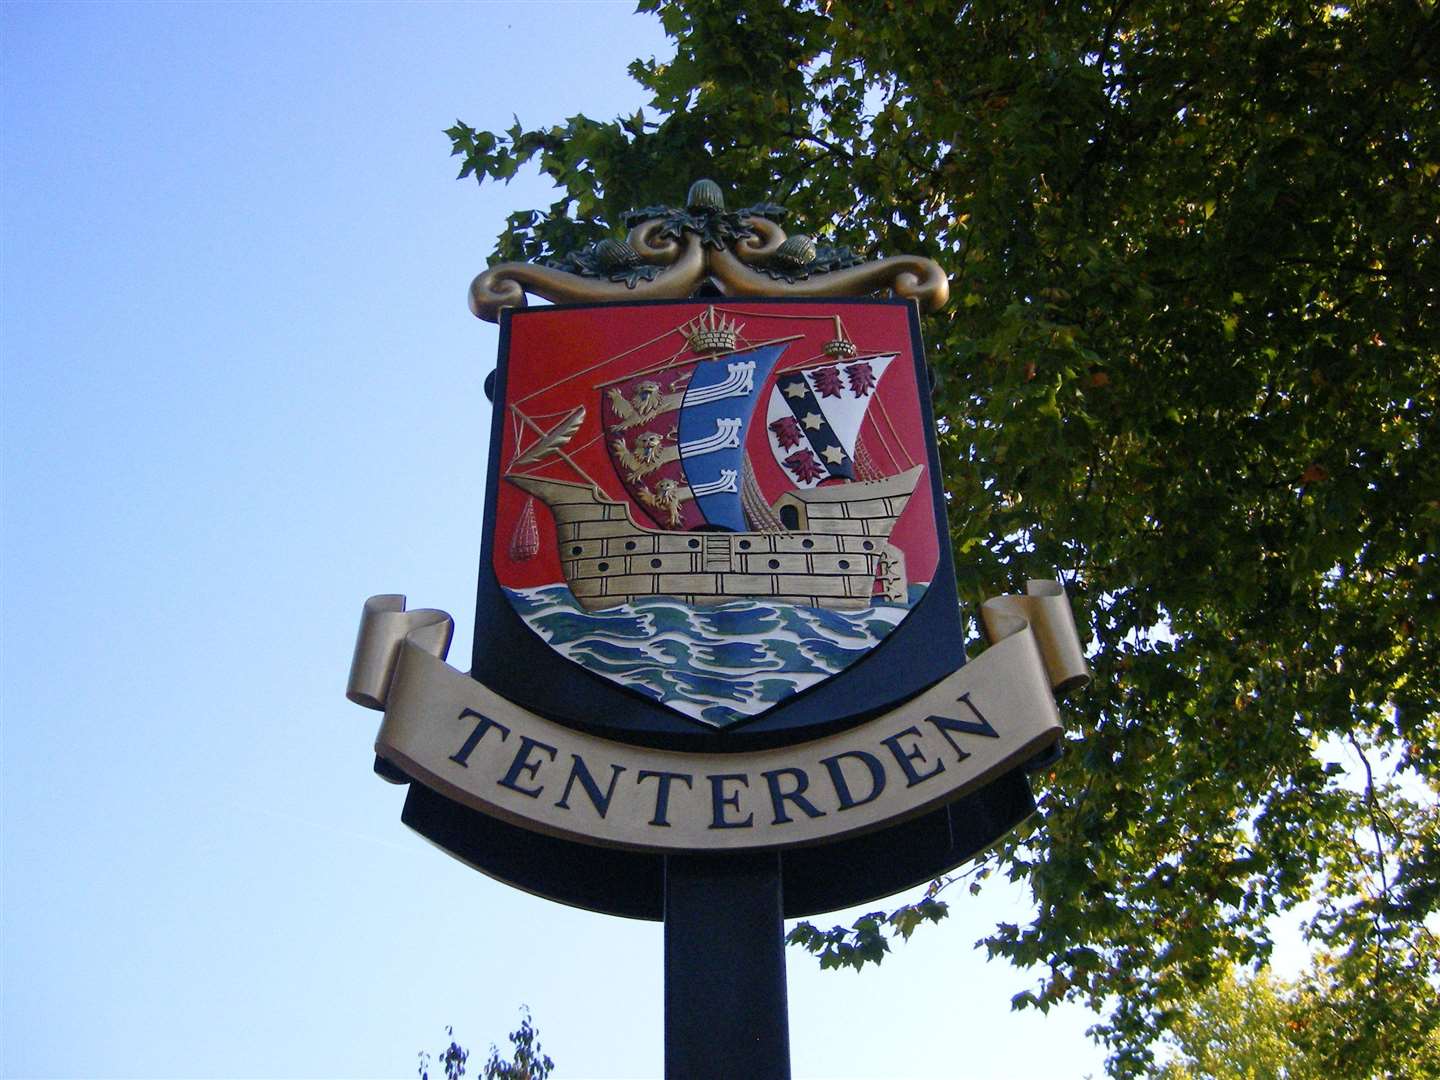 The family live in Tenterden